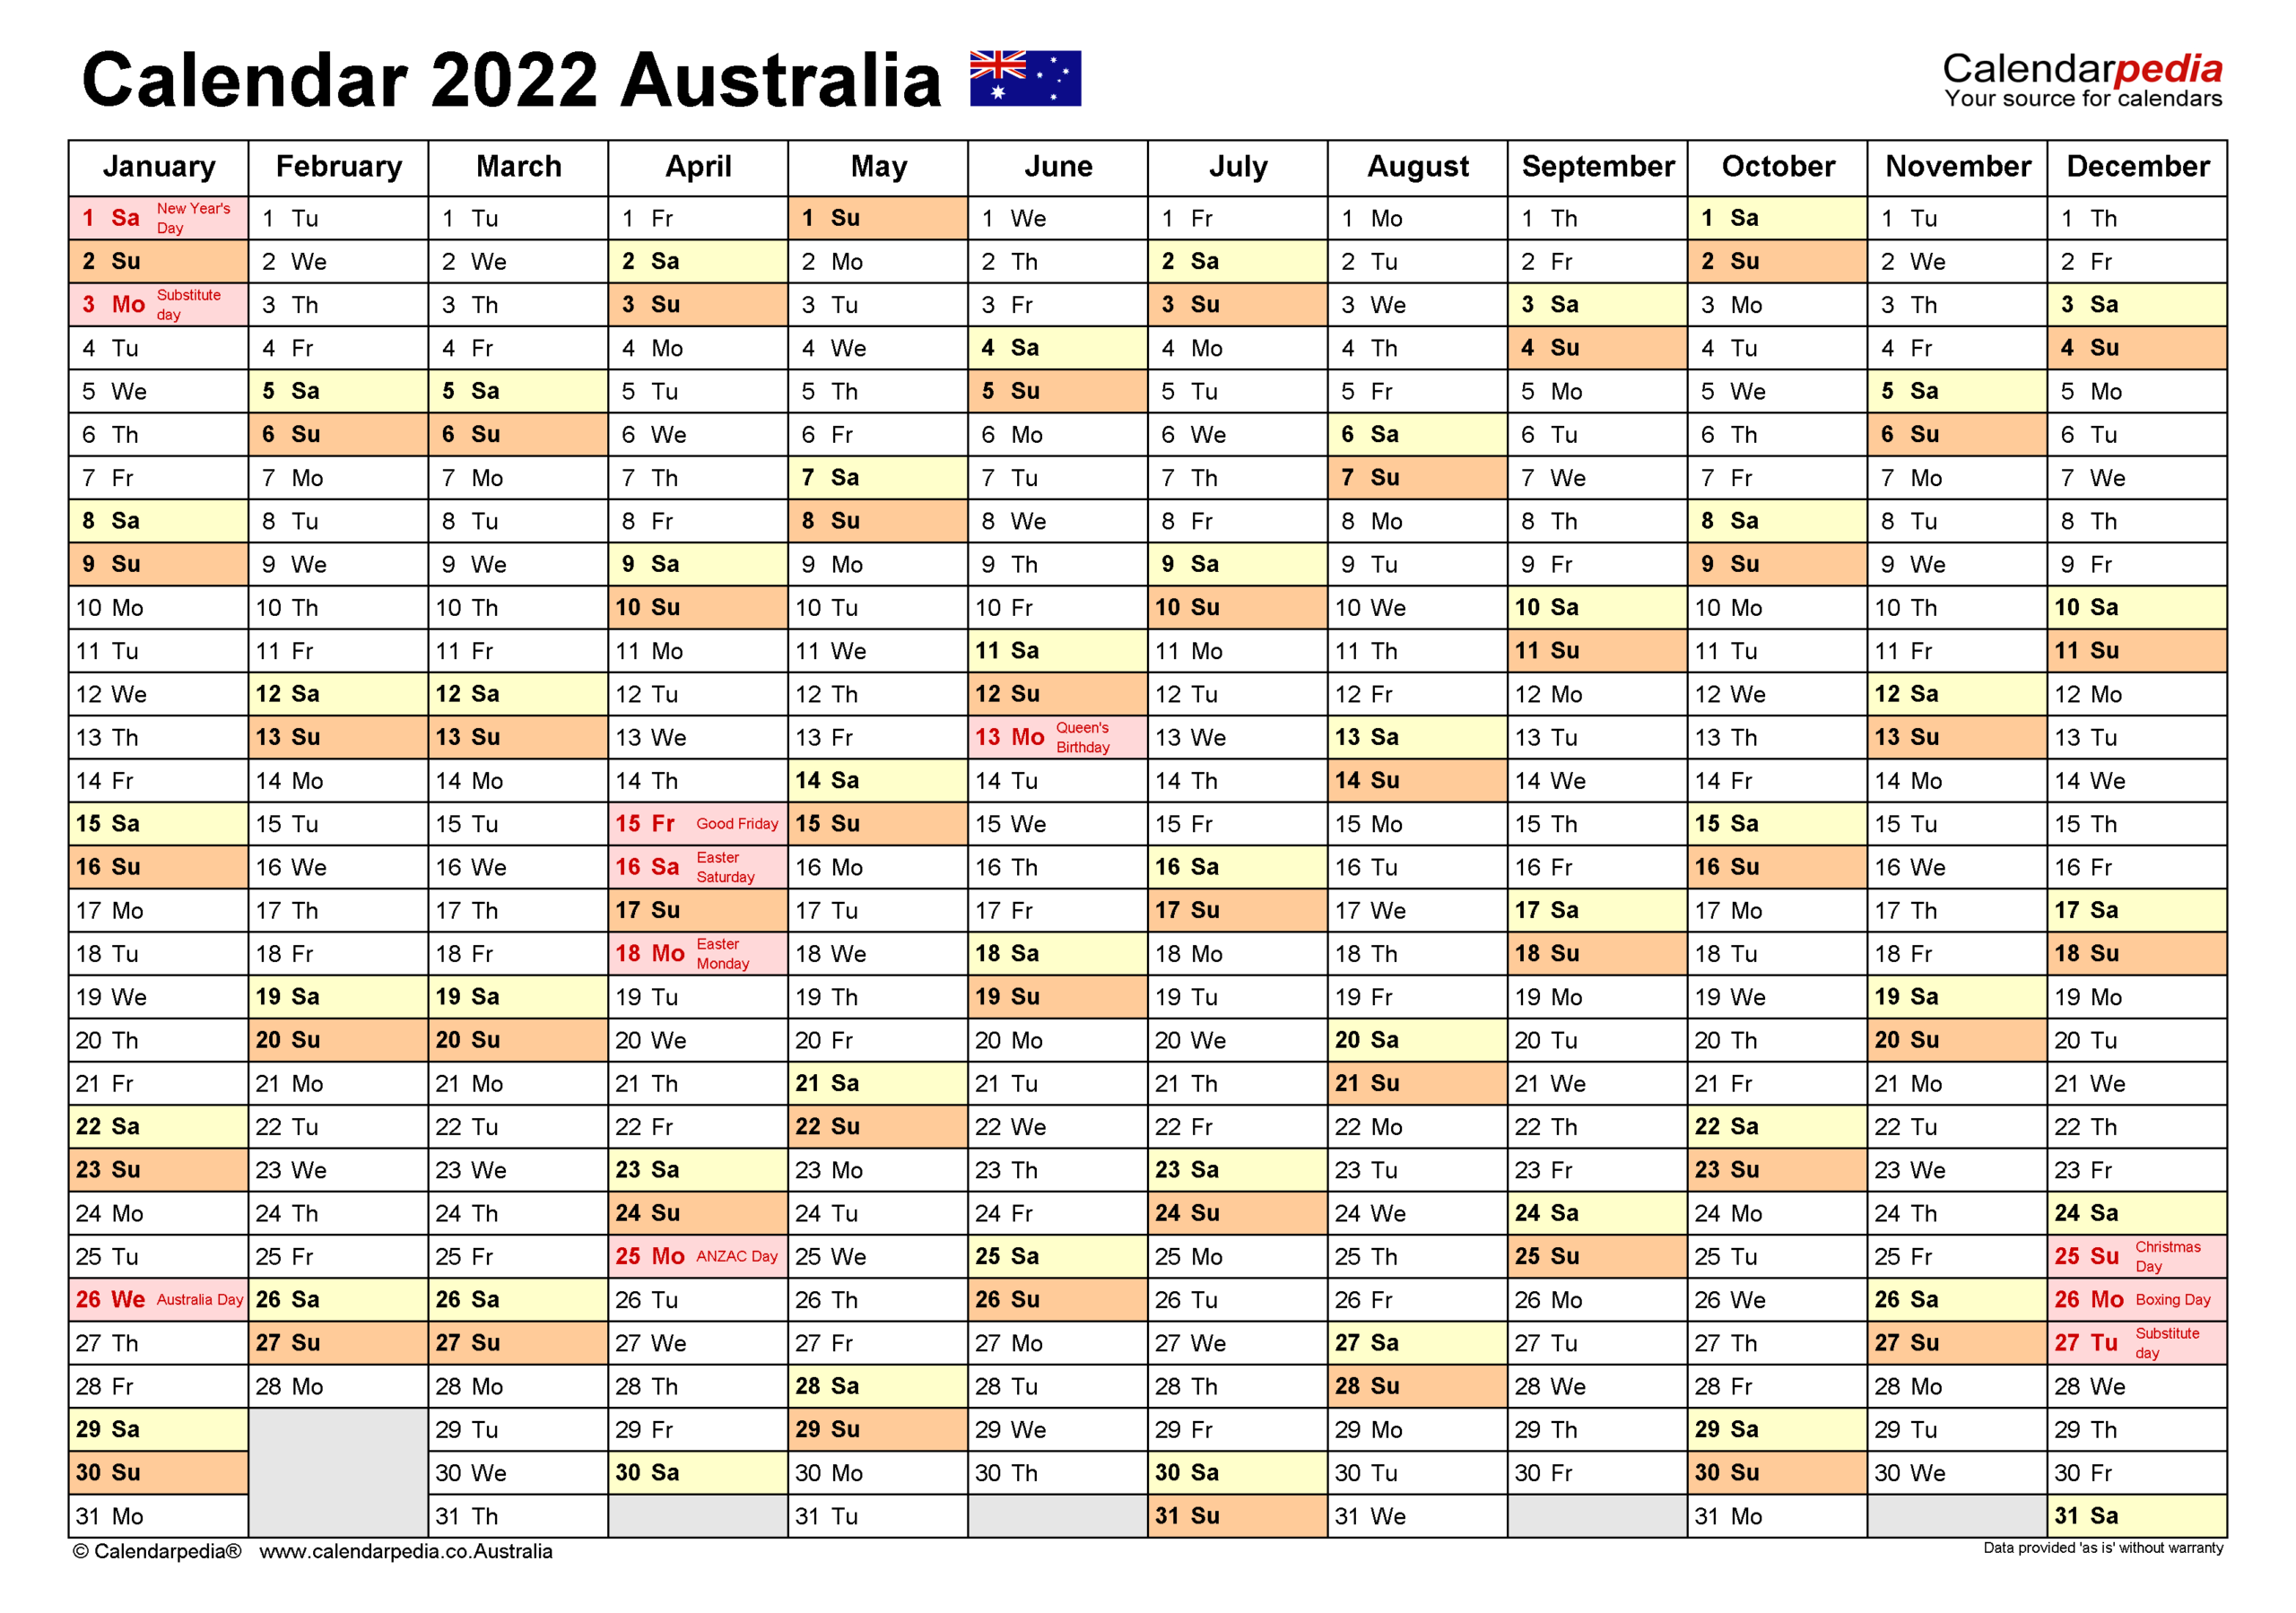 Easter 2022 Dates Australia Nexta within Calendar 2022 Victoria Australia